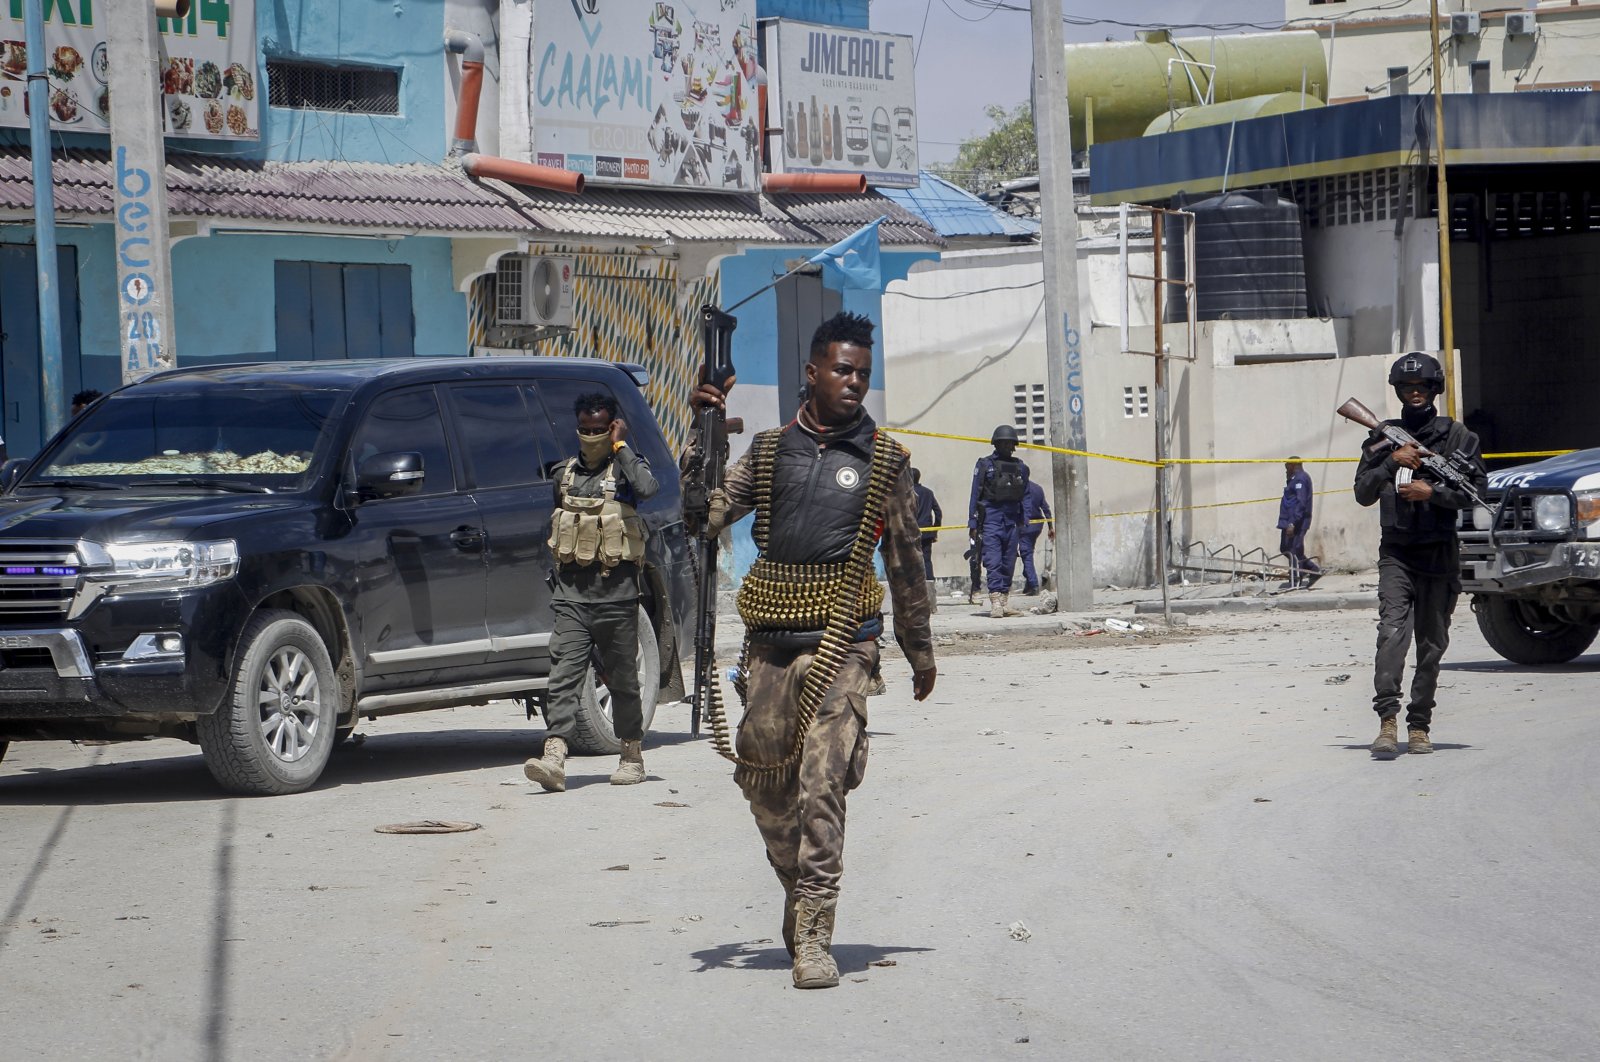 Somali security forces patrol the scene of a previous terrorist attack in Mogadishu, Somalia, Aug. 21, 2022. (AP Photo)